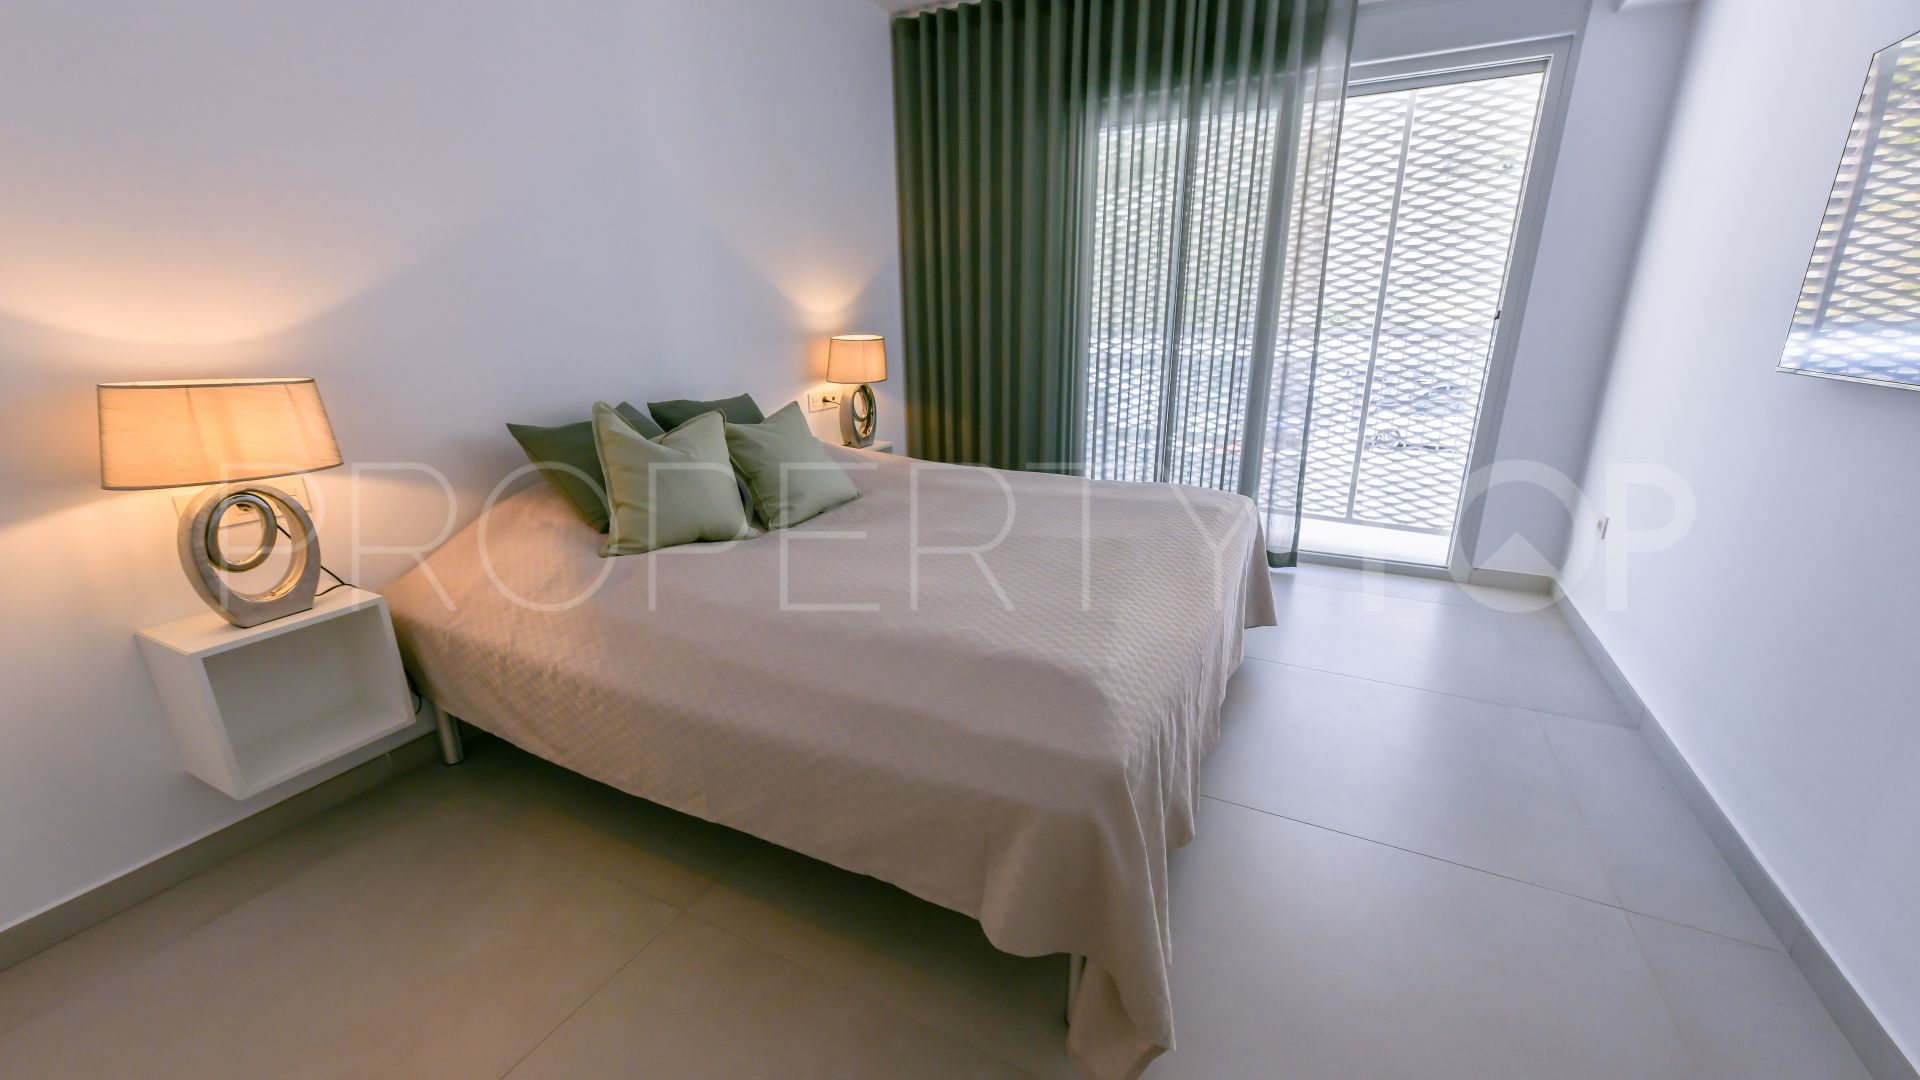 For sale 4 bedrooms duplex penthouse in Benalmadena Costa